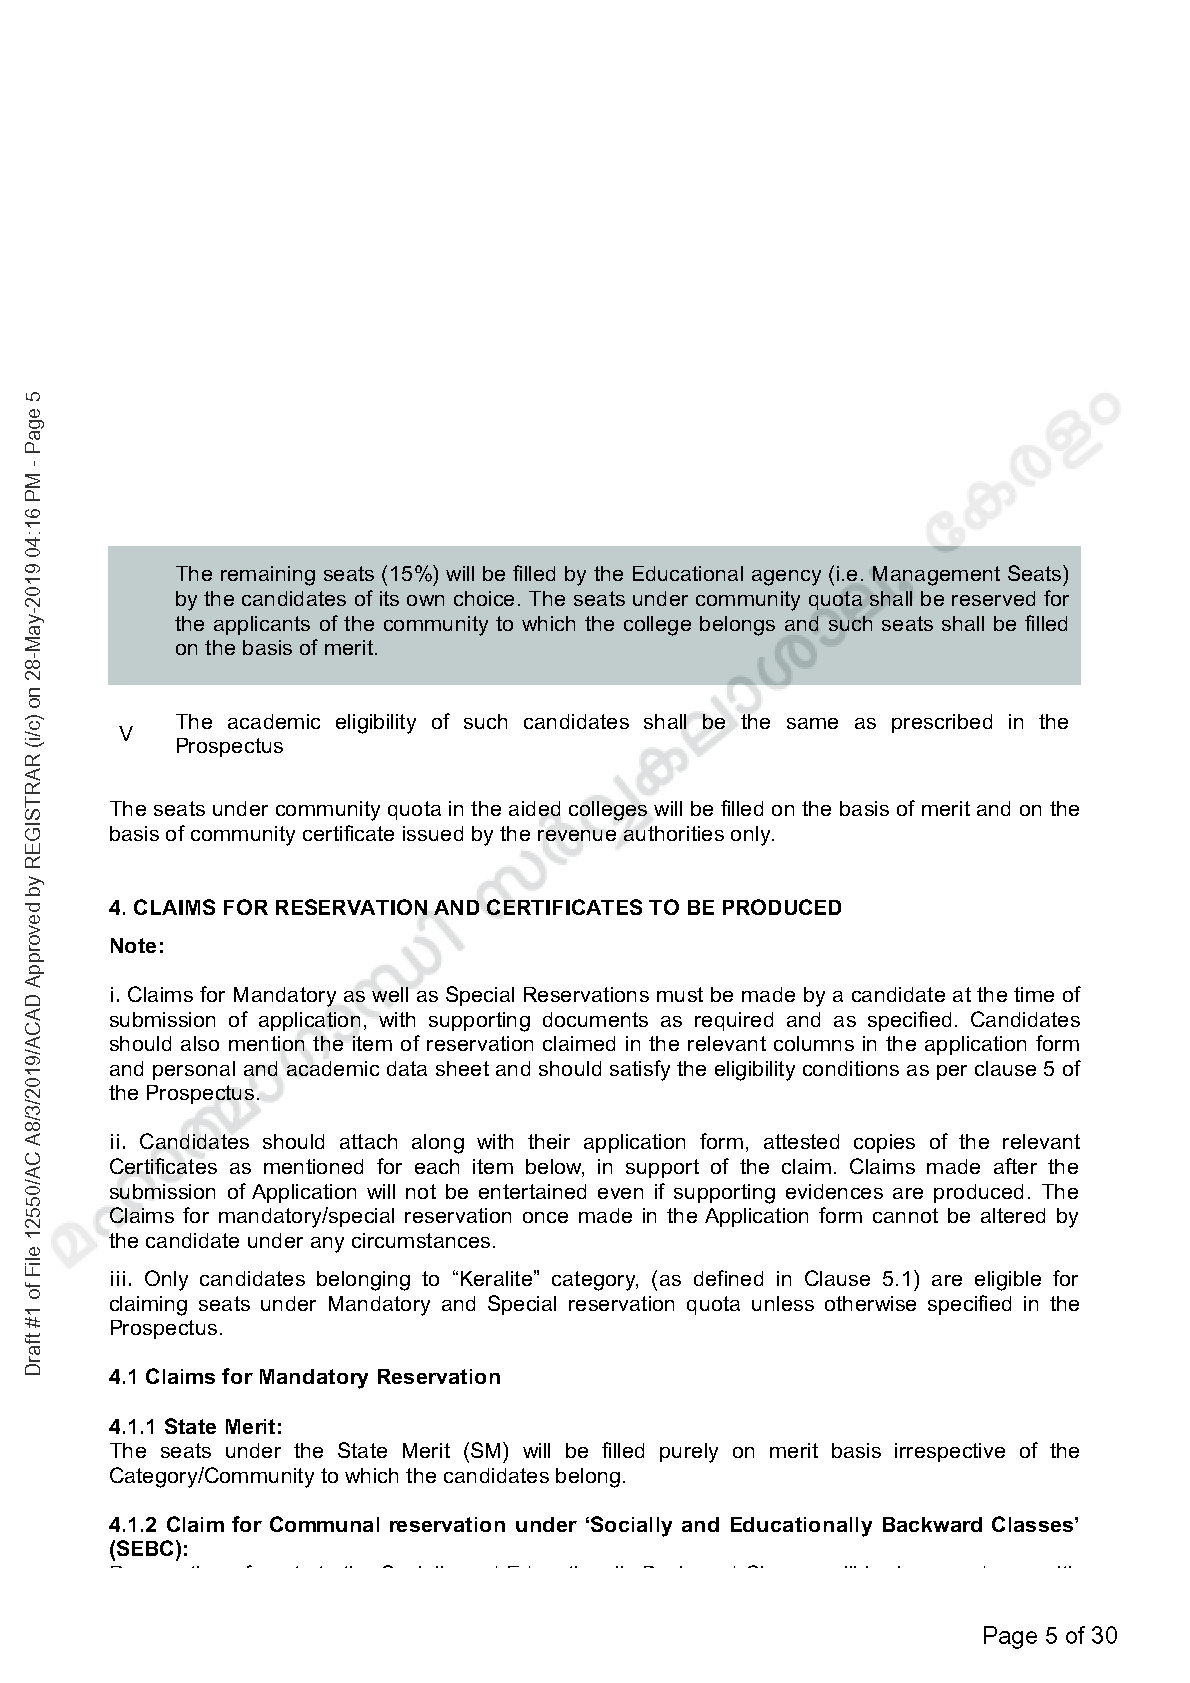 MG University B Ed Prospectus and Application form 2019 2020 - Notification Image 5